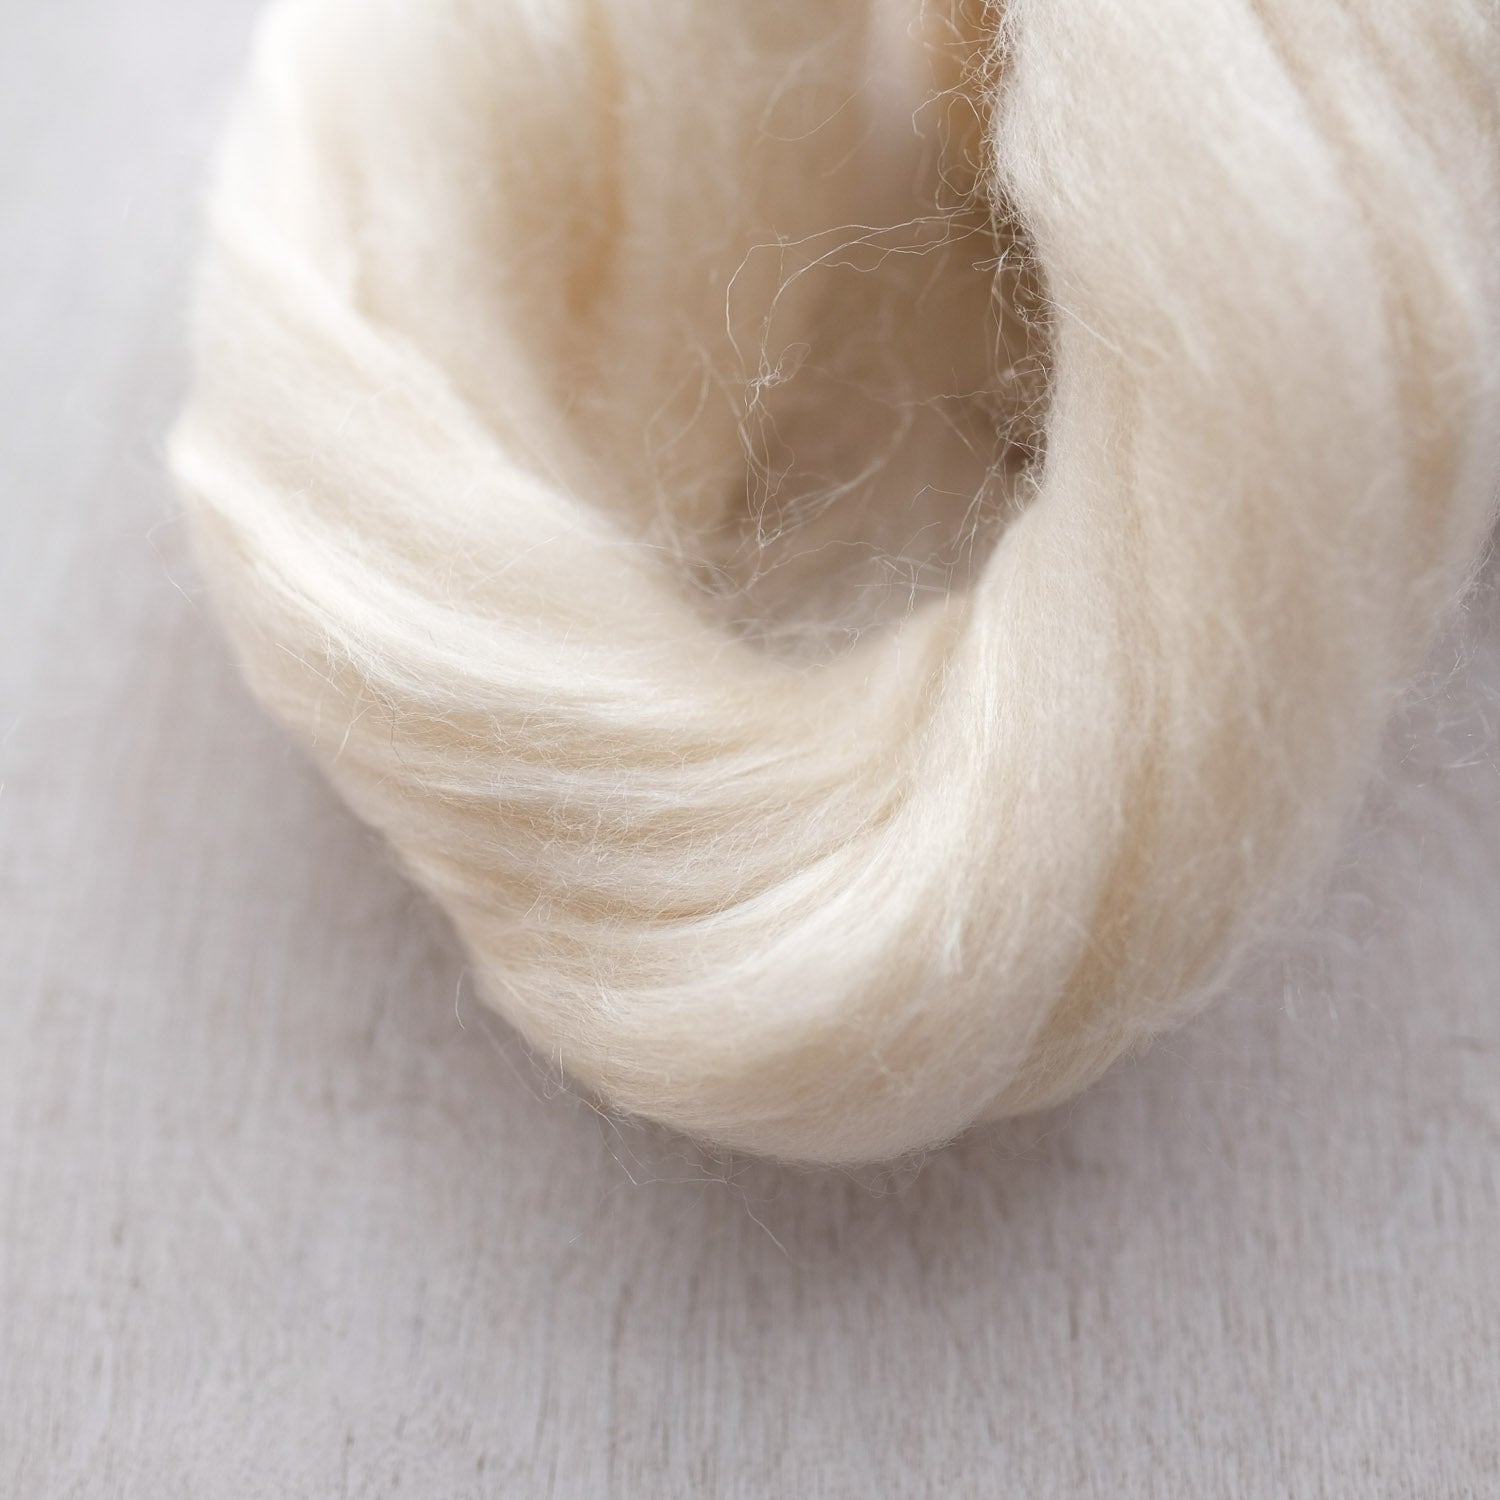 Label: 70 merino / 30 tussah silk 